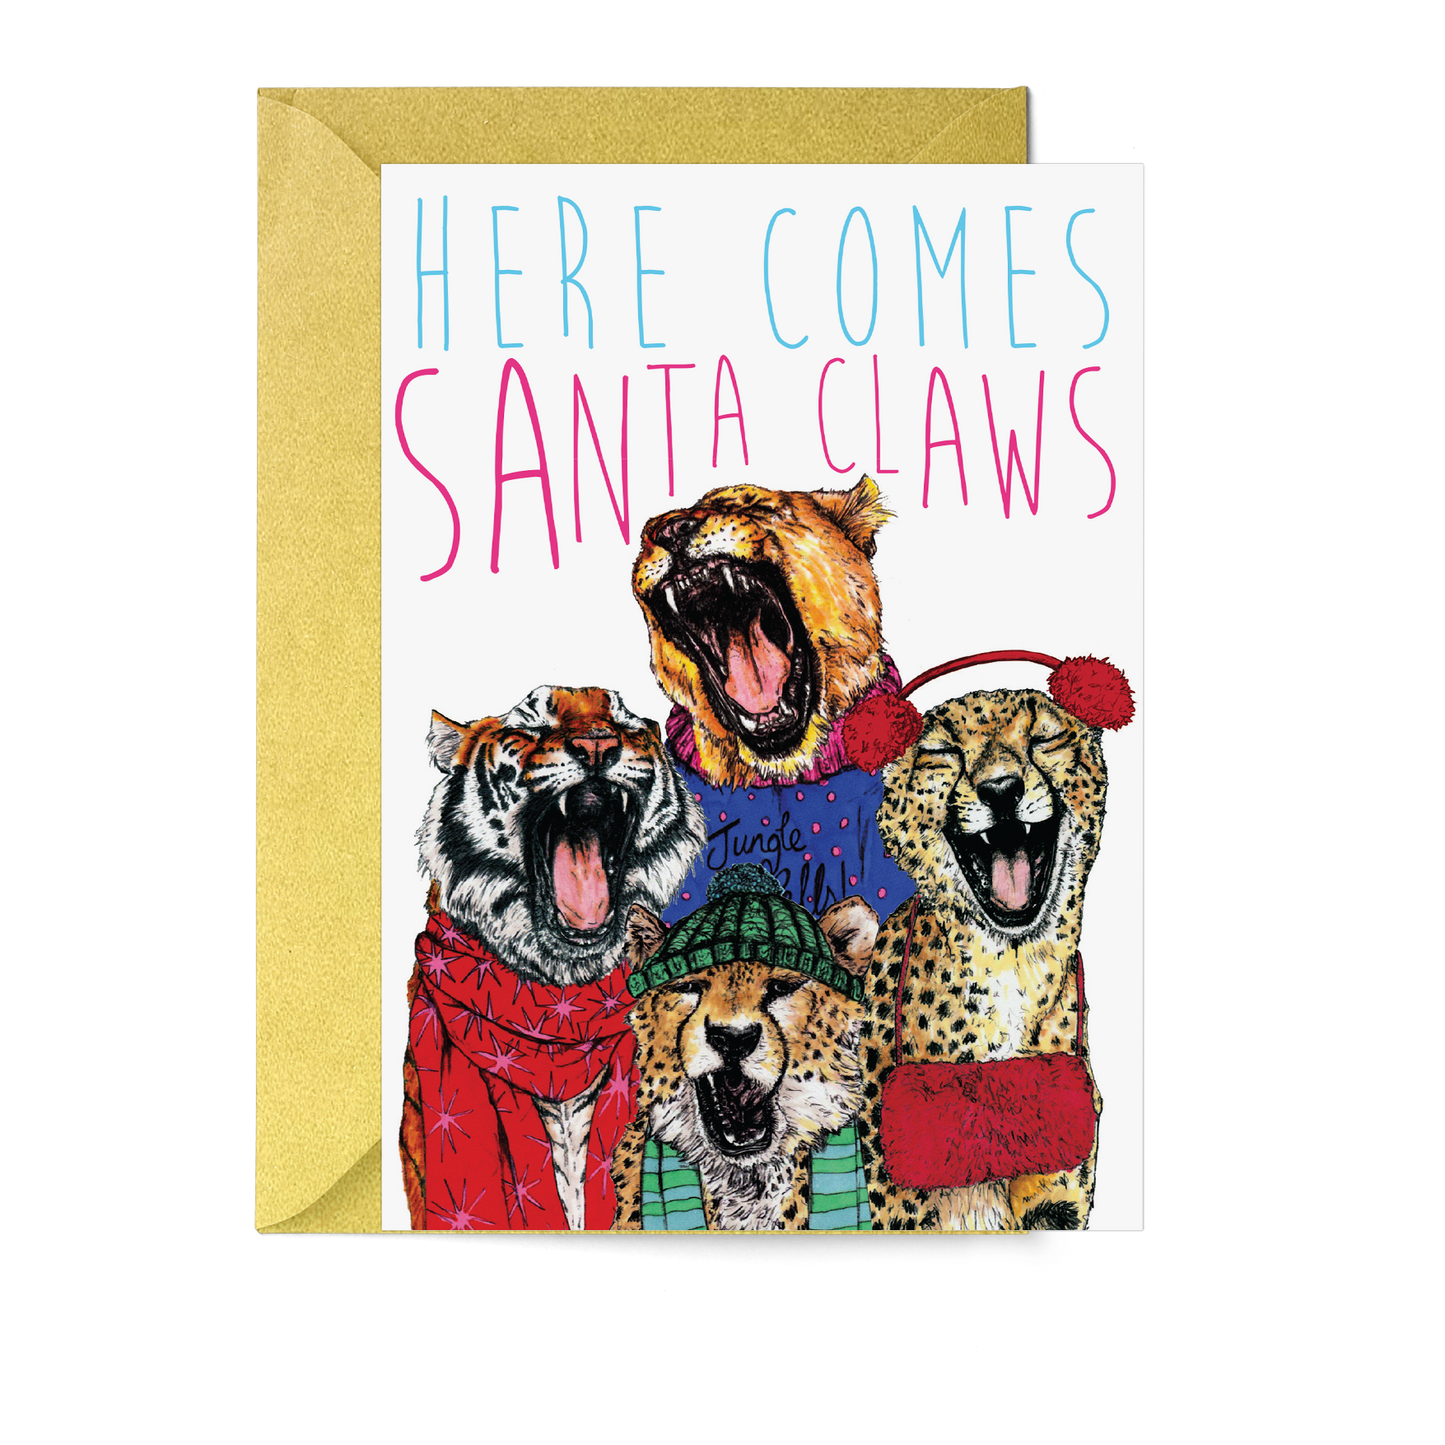 Caroling Cats 'Santa Claws' Christmas Card - Fawn and Thistle